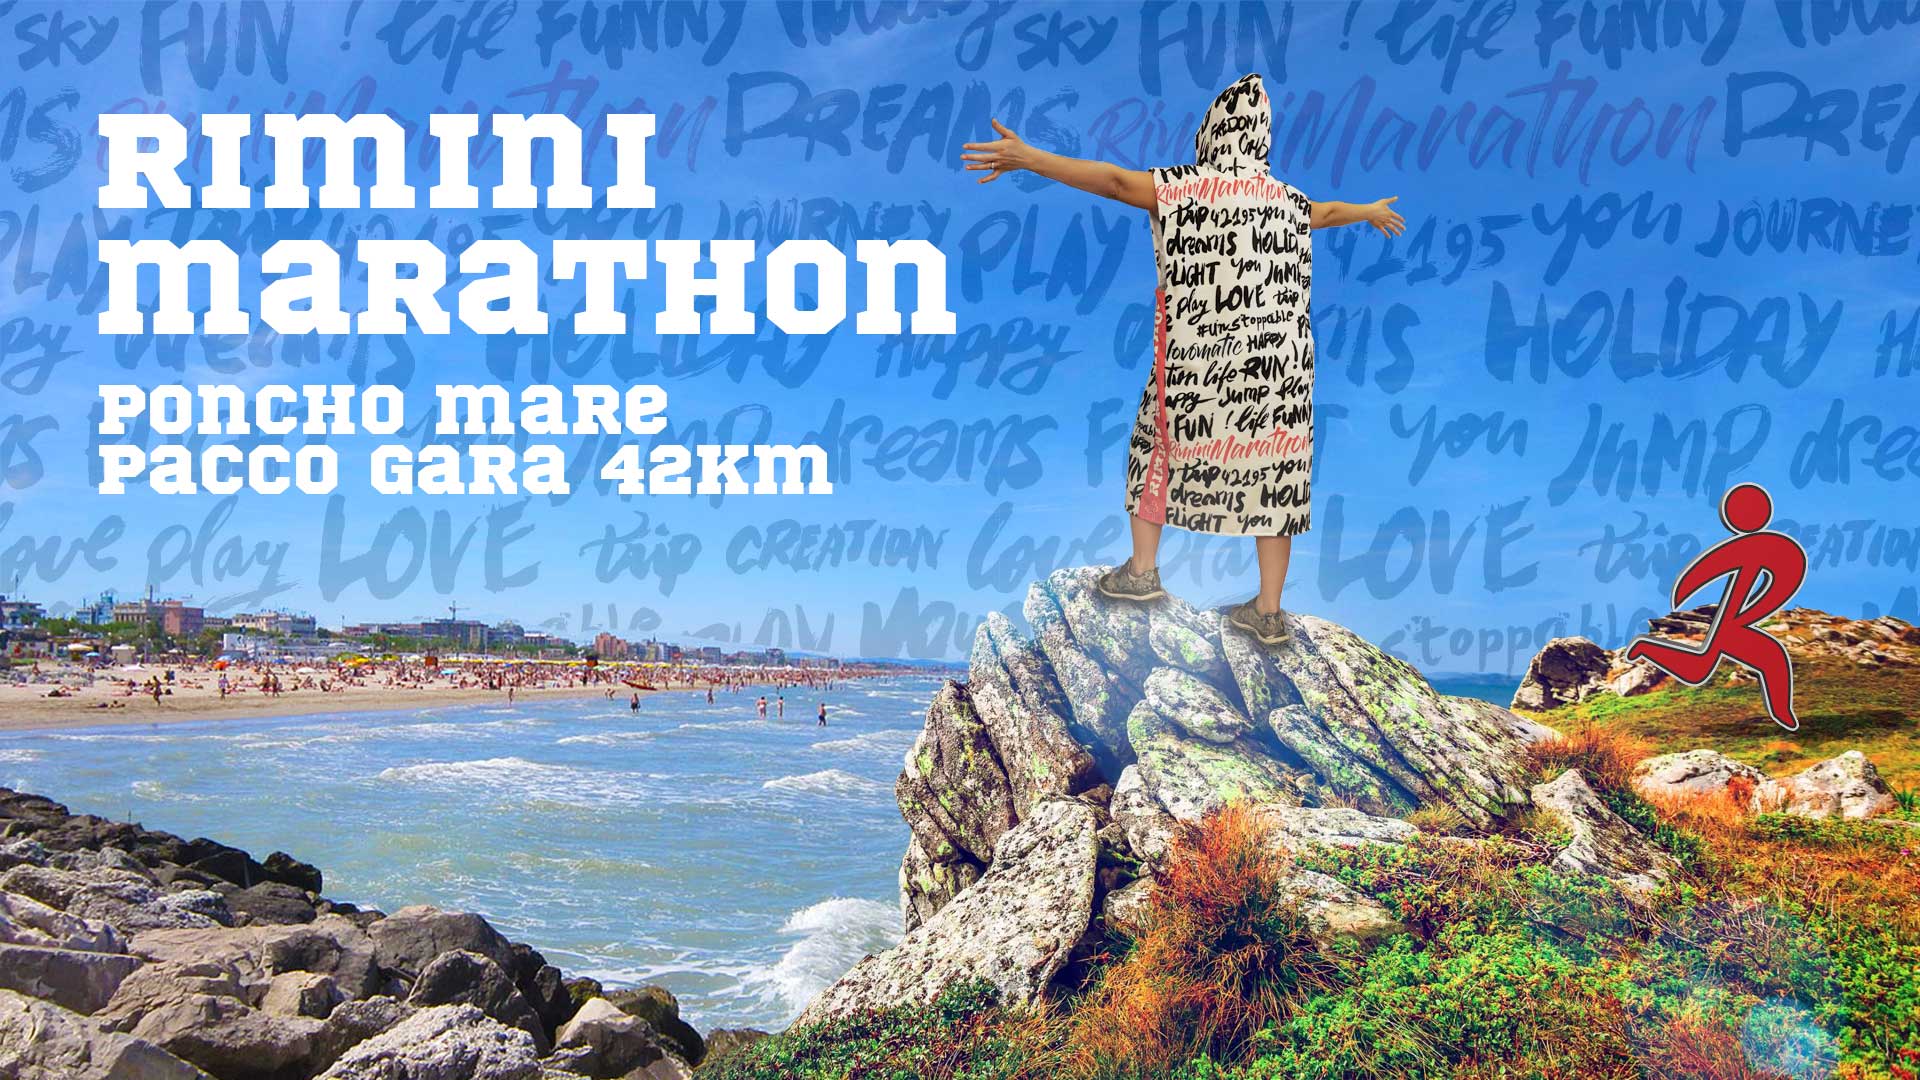 pacco-gara-rimini-marathon-2018